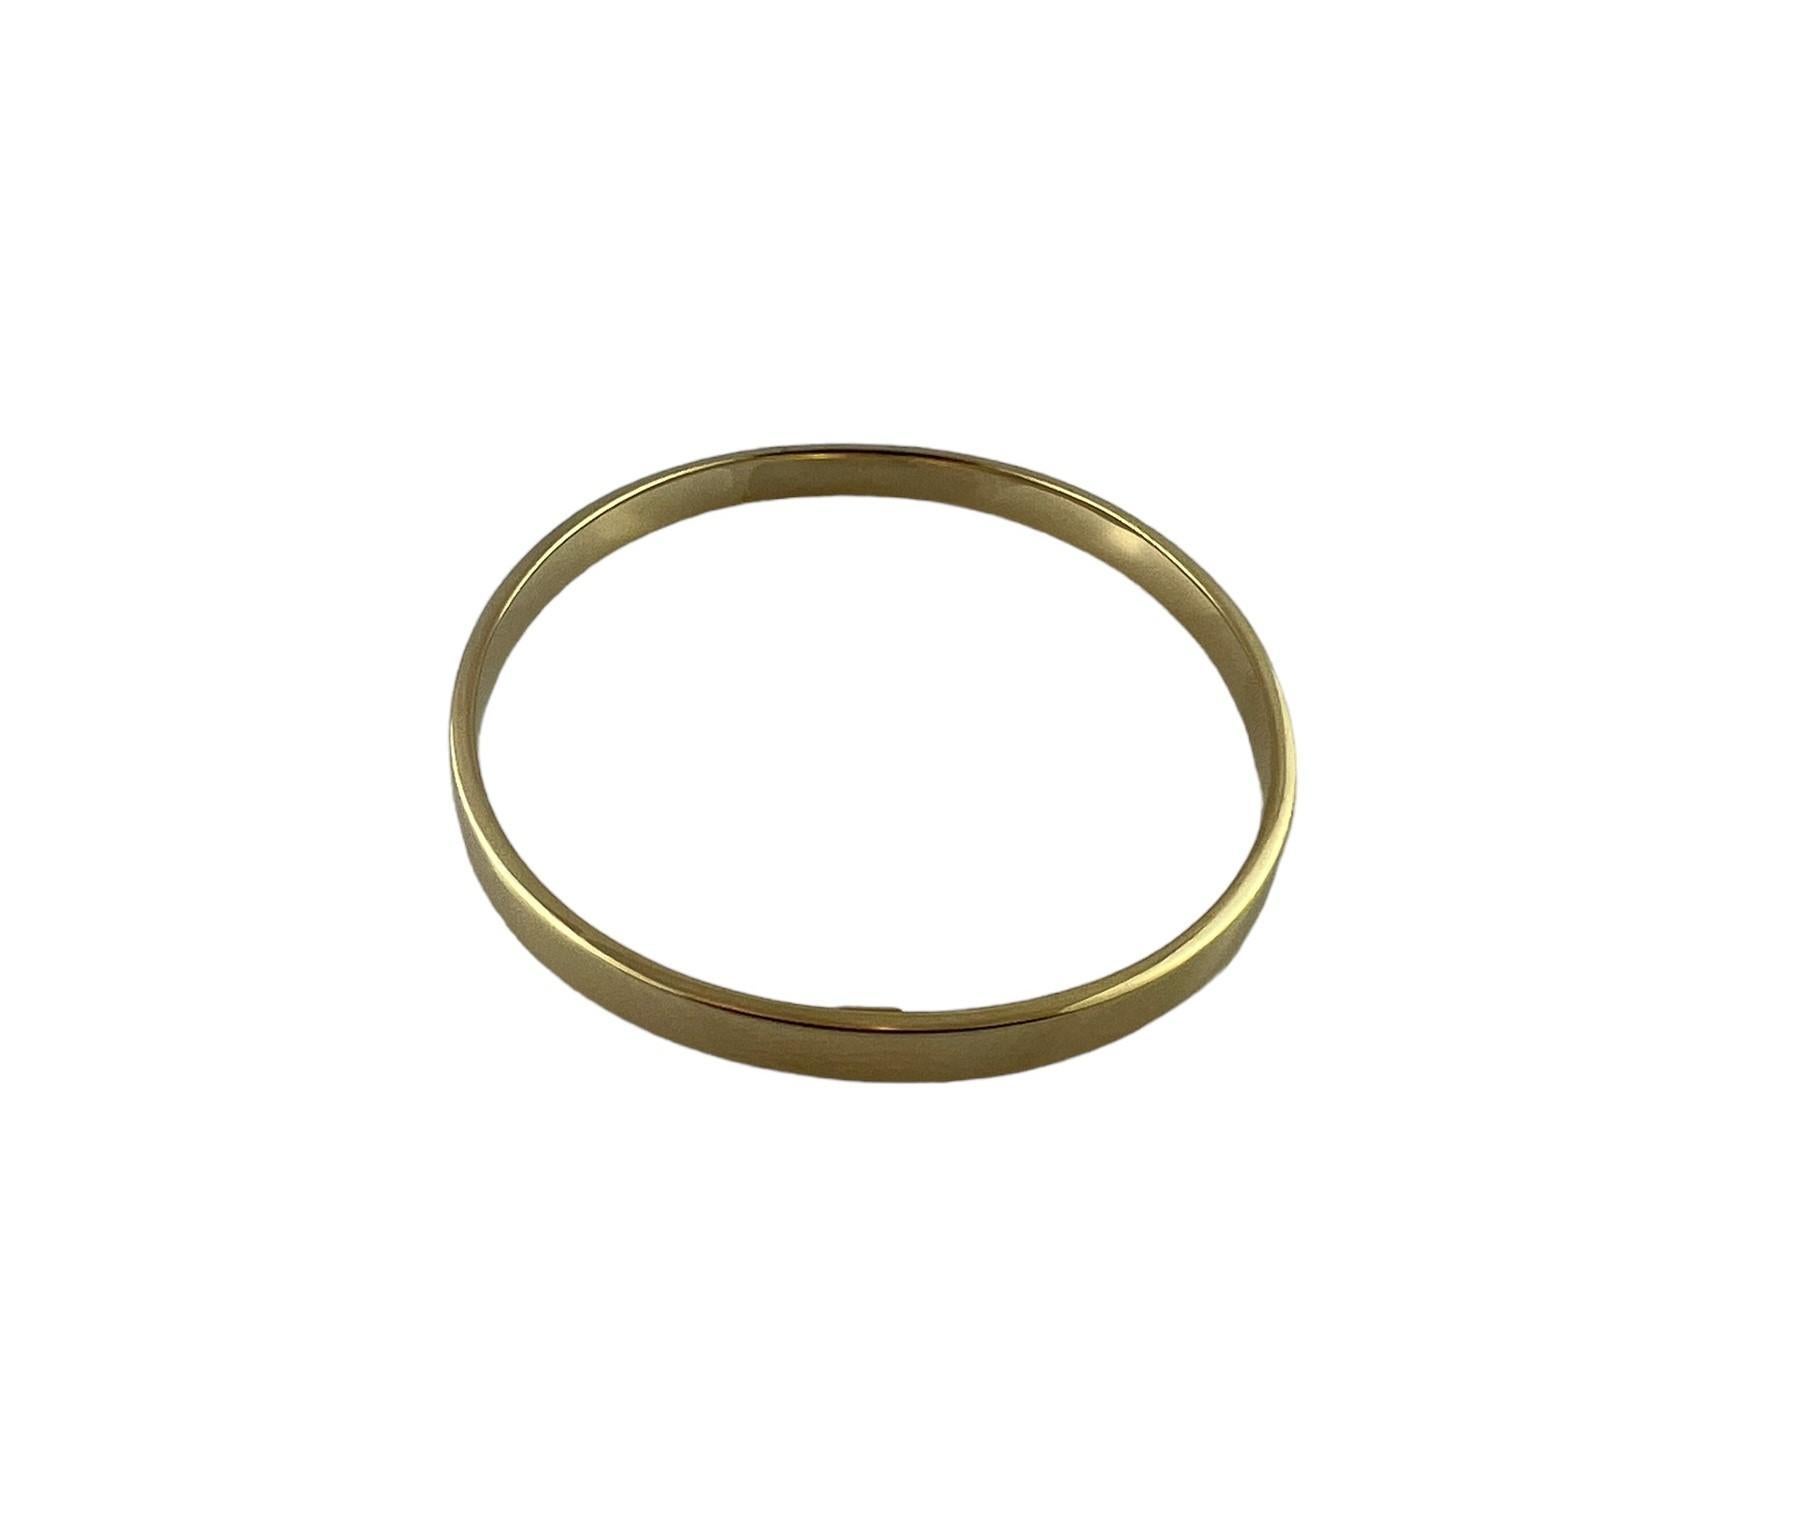 Tiffany & Co. 18K Yellow Gold Oval Bangle Bracelet

This beautiful bracelet is set in 18k yellow gold

Approx. 7.5